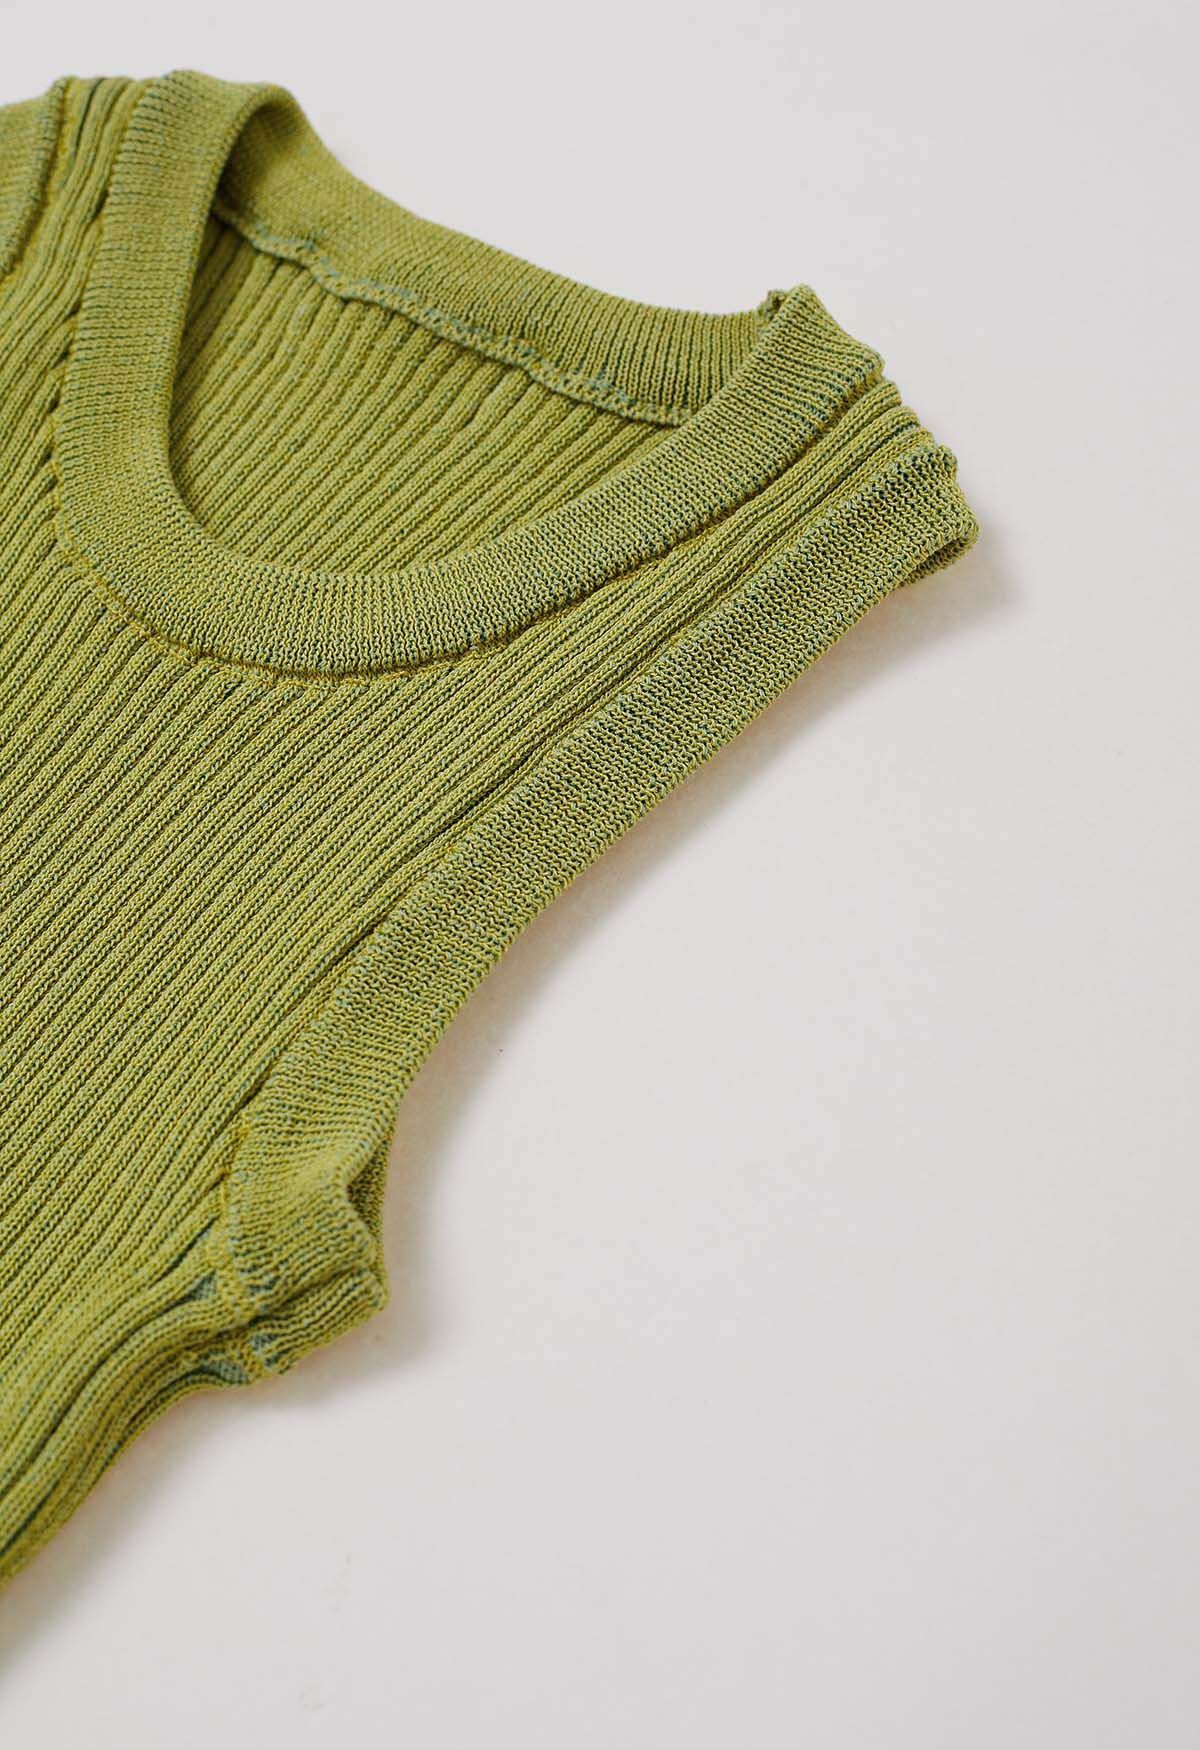 Stripe Texture Knit Tank Top in Green